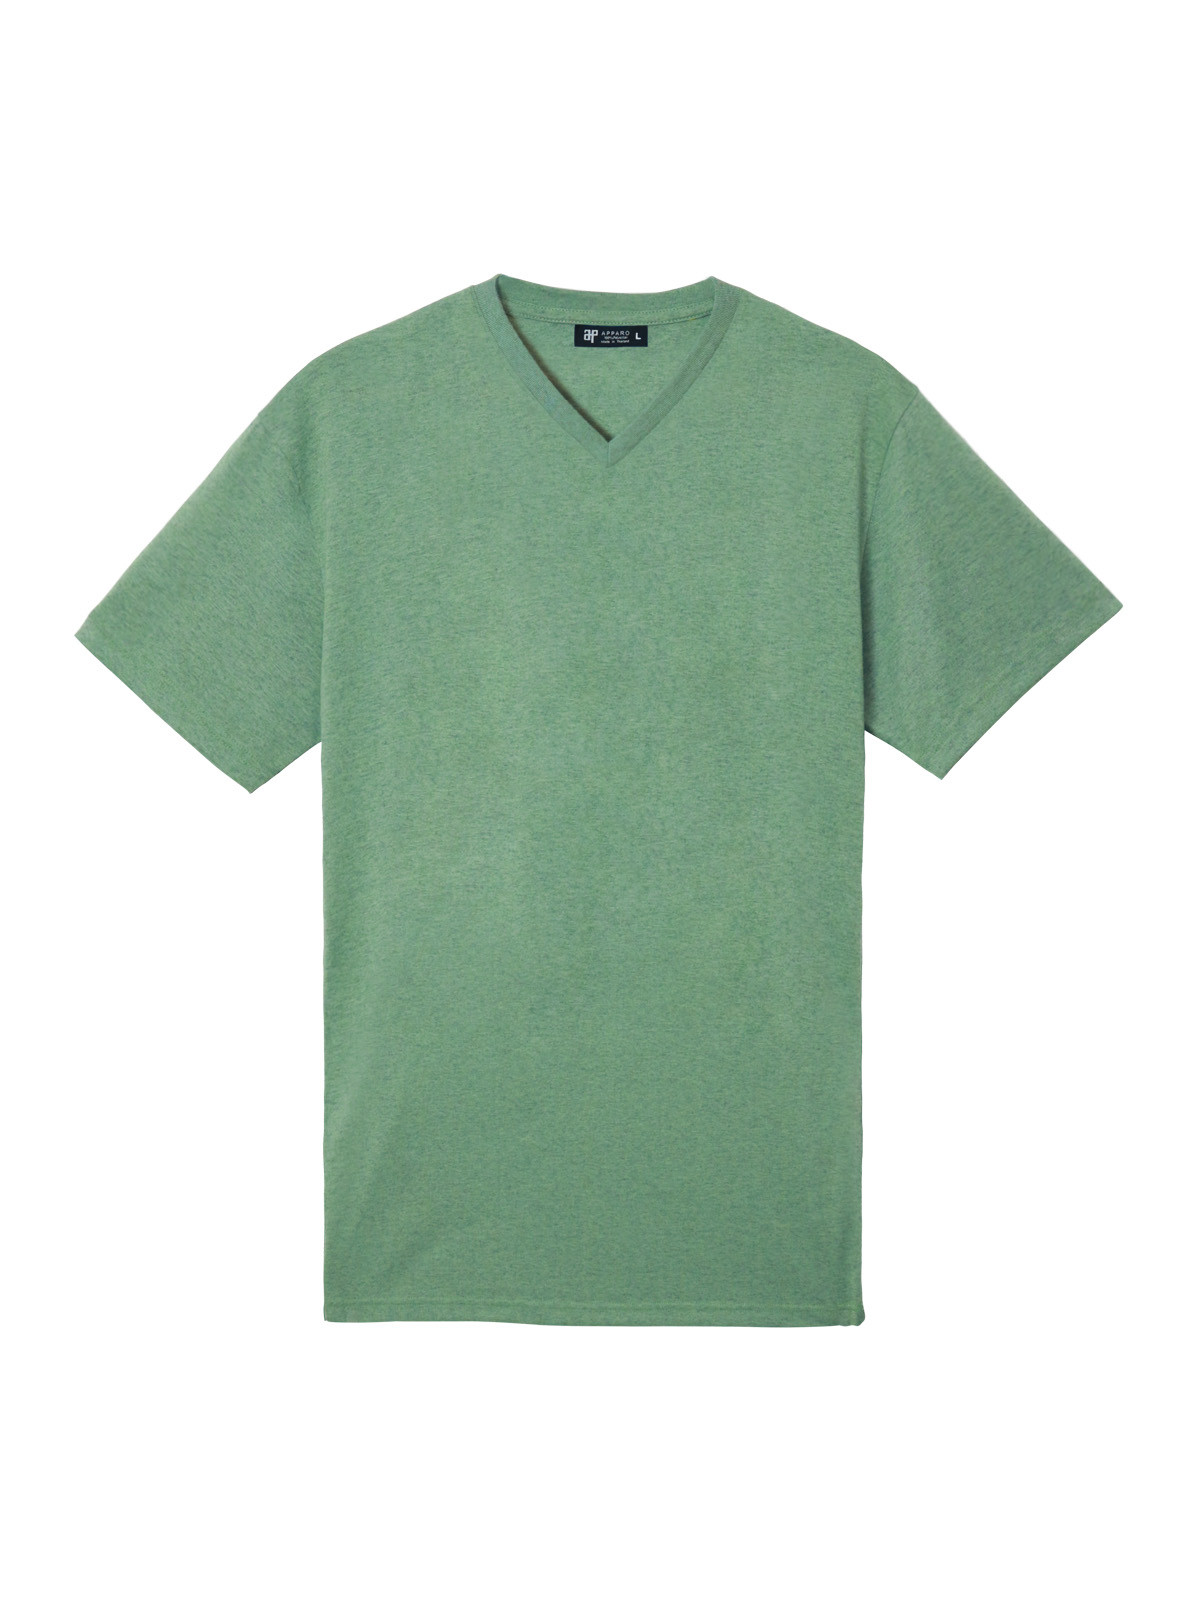 V-neck top dye t-shirt, green